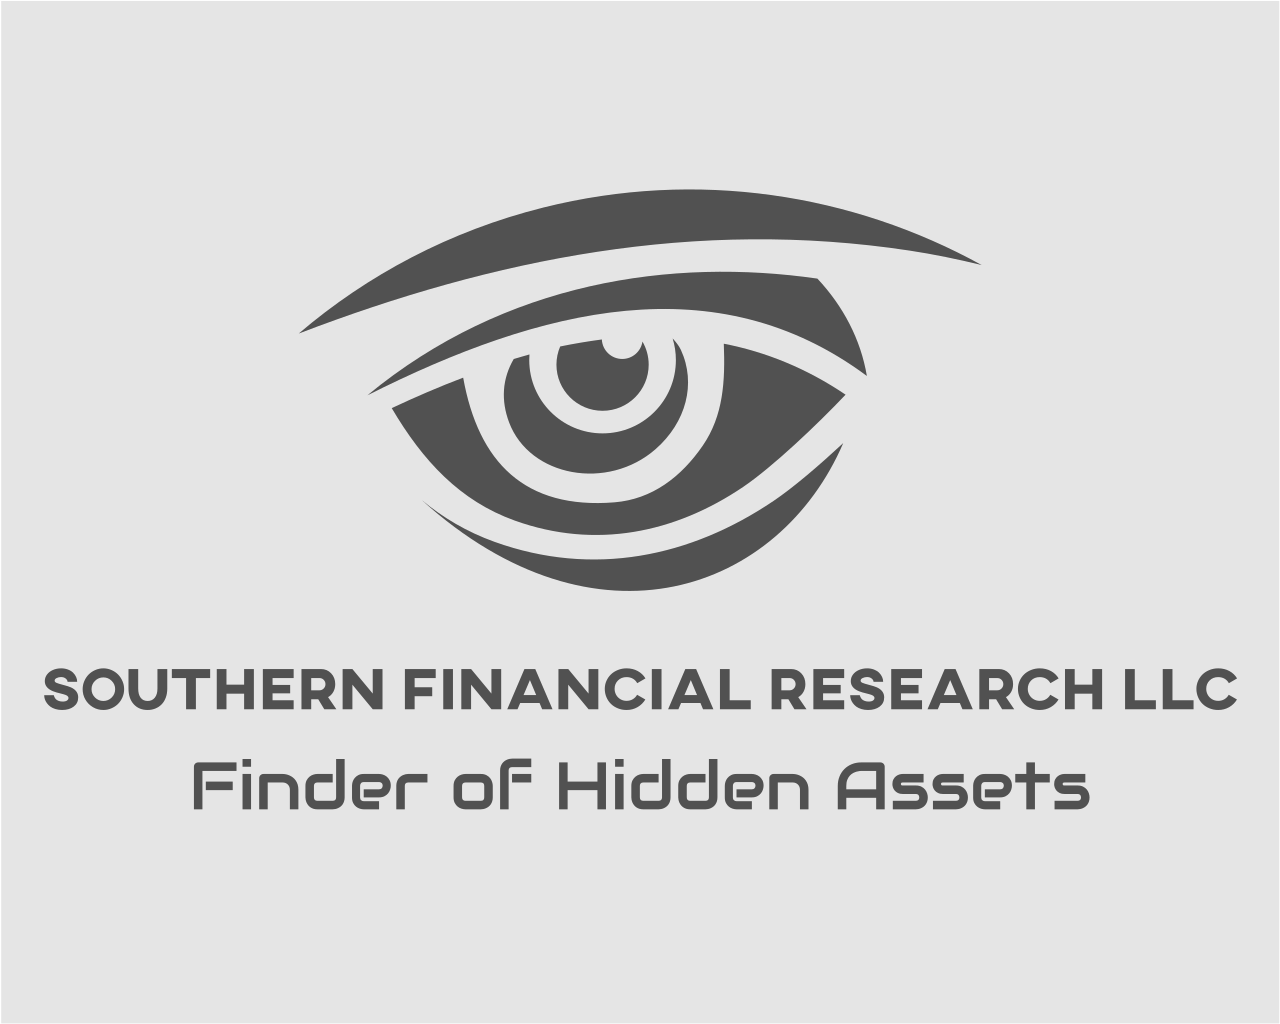 Southern Financial Research LLC